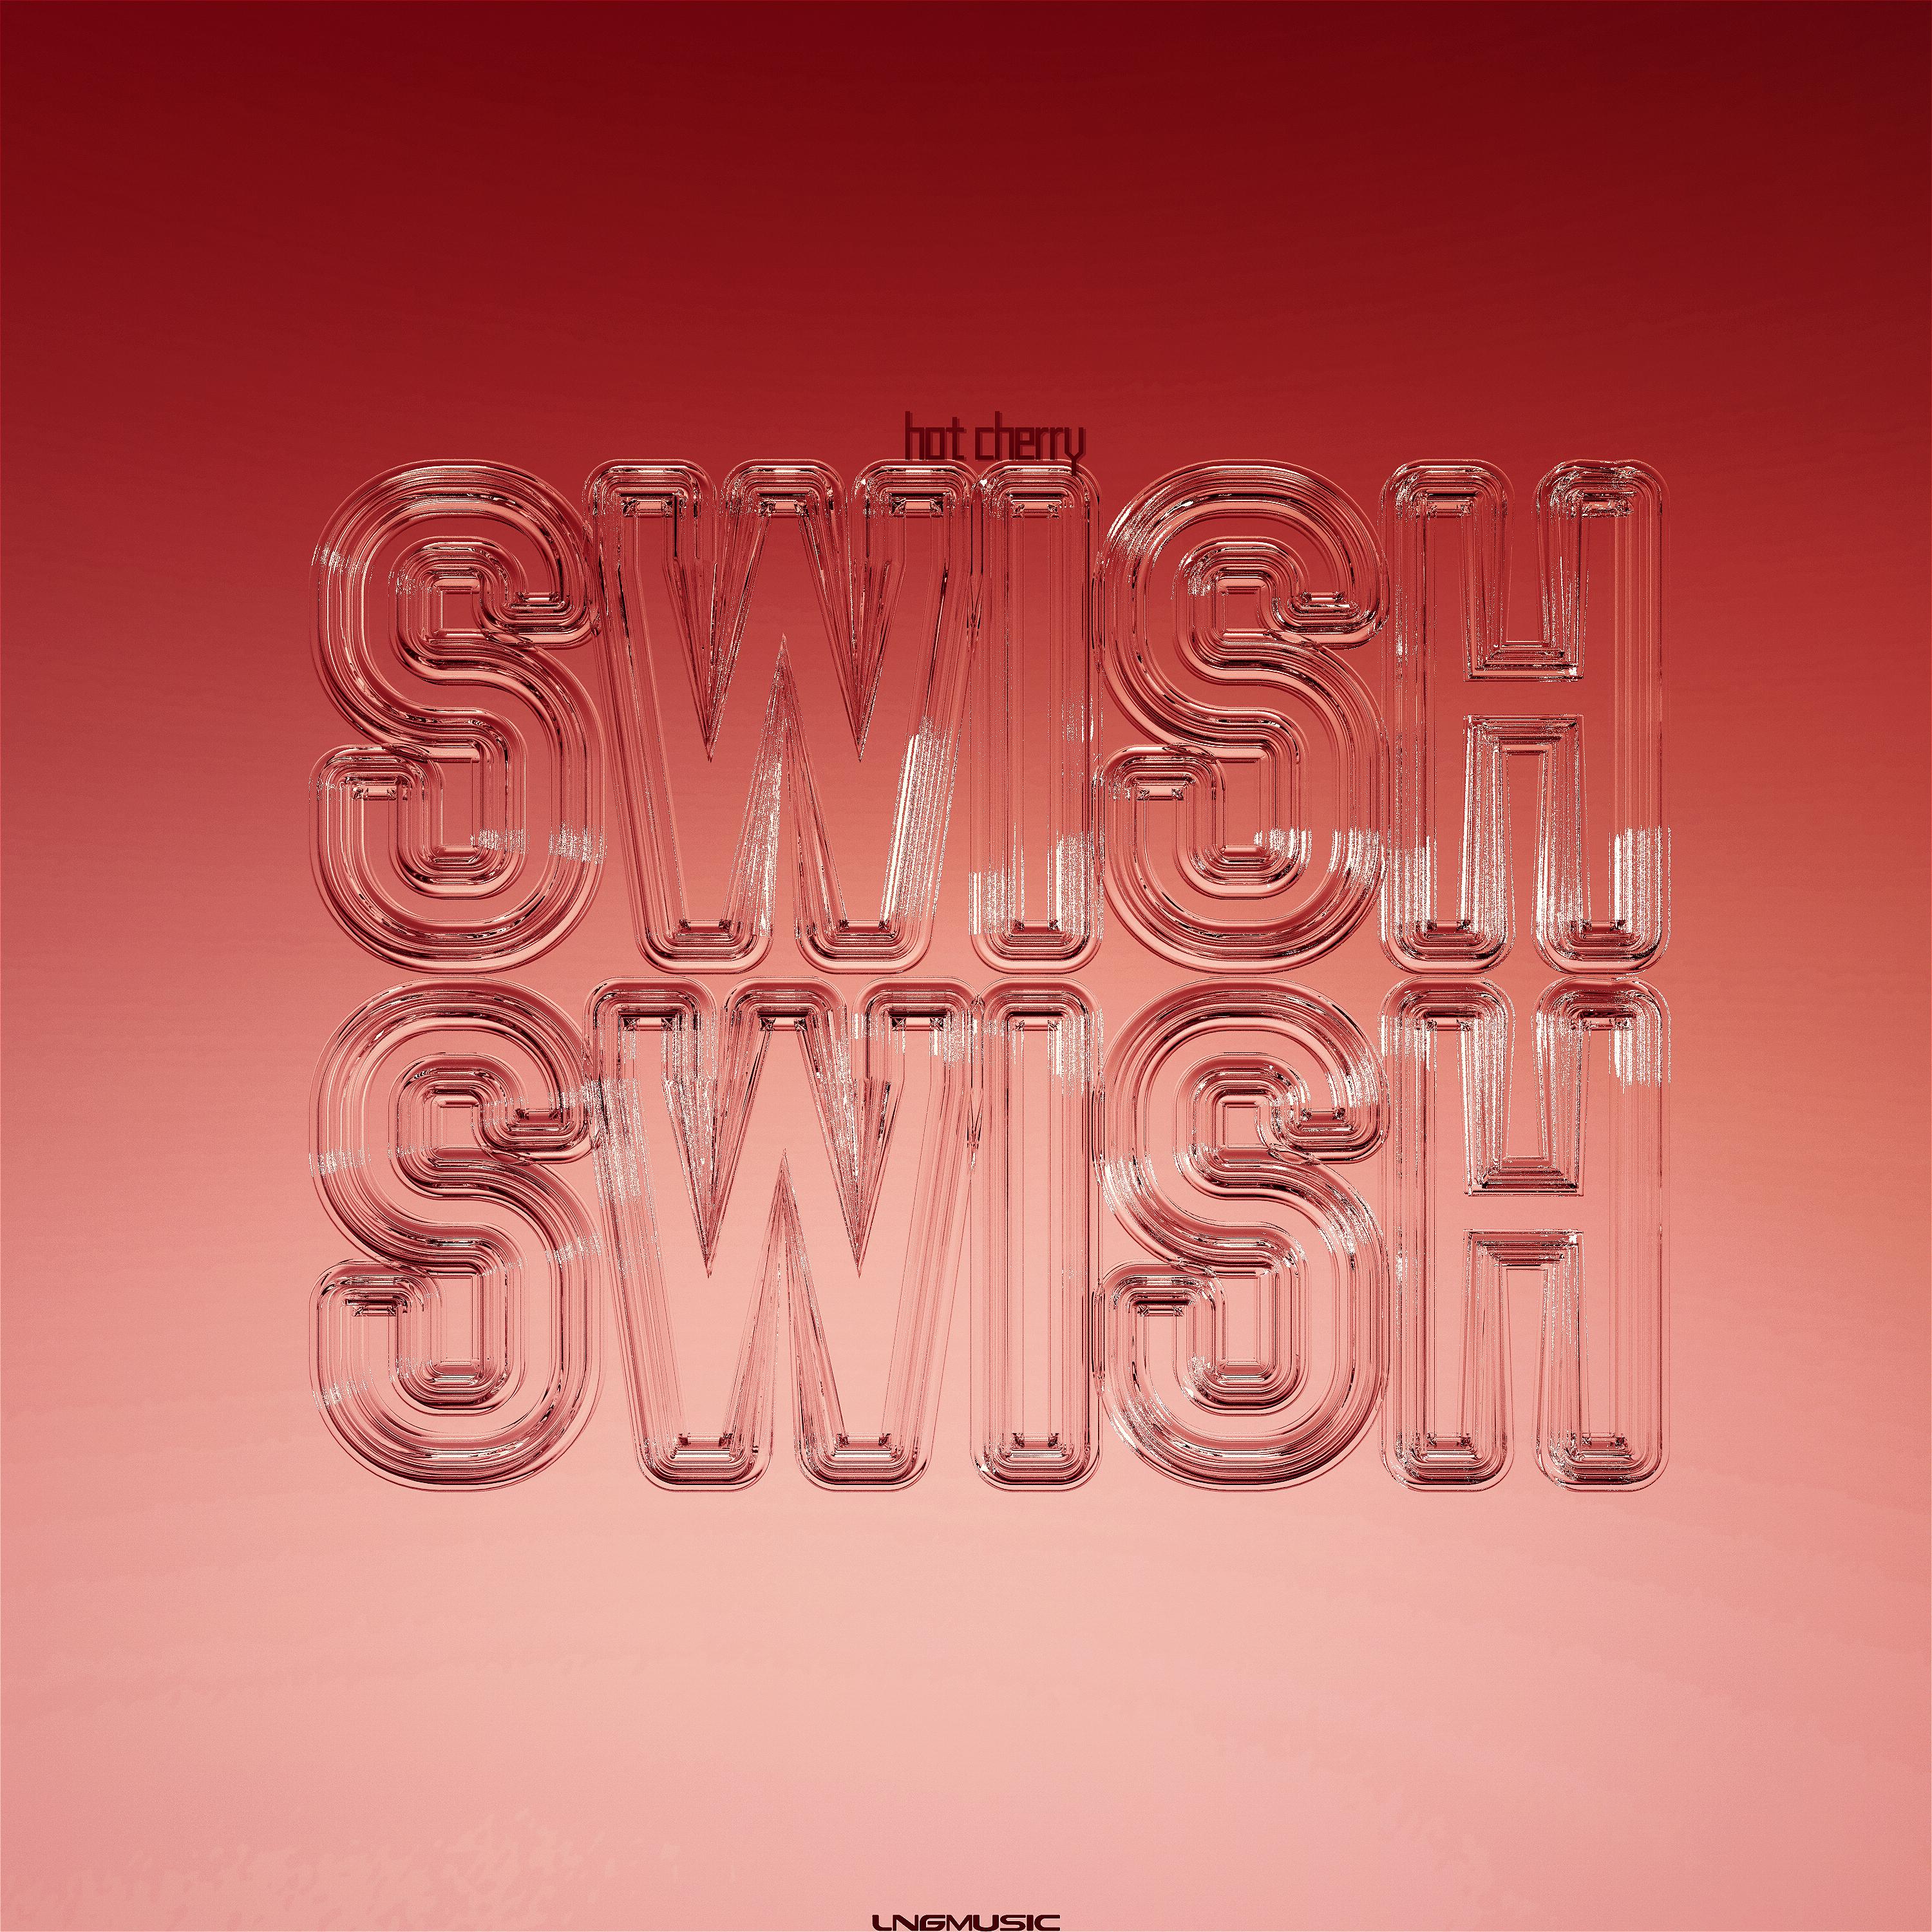 Swish Swish (Acoustic Chillout Version)